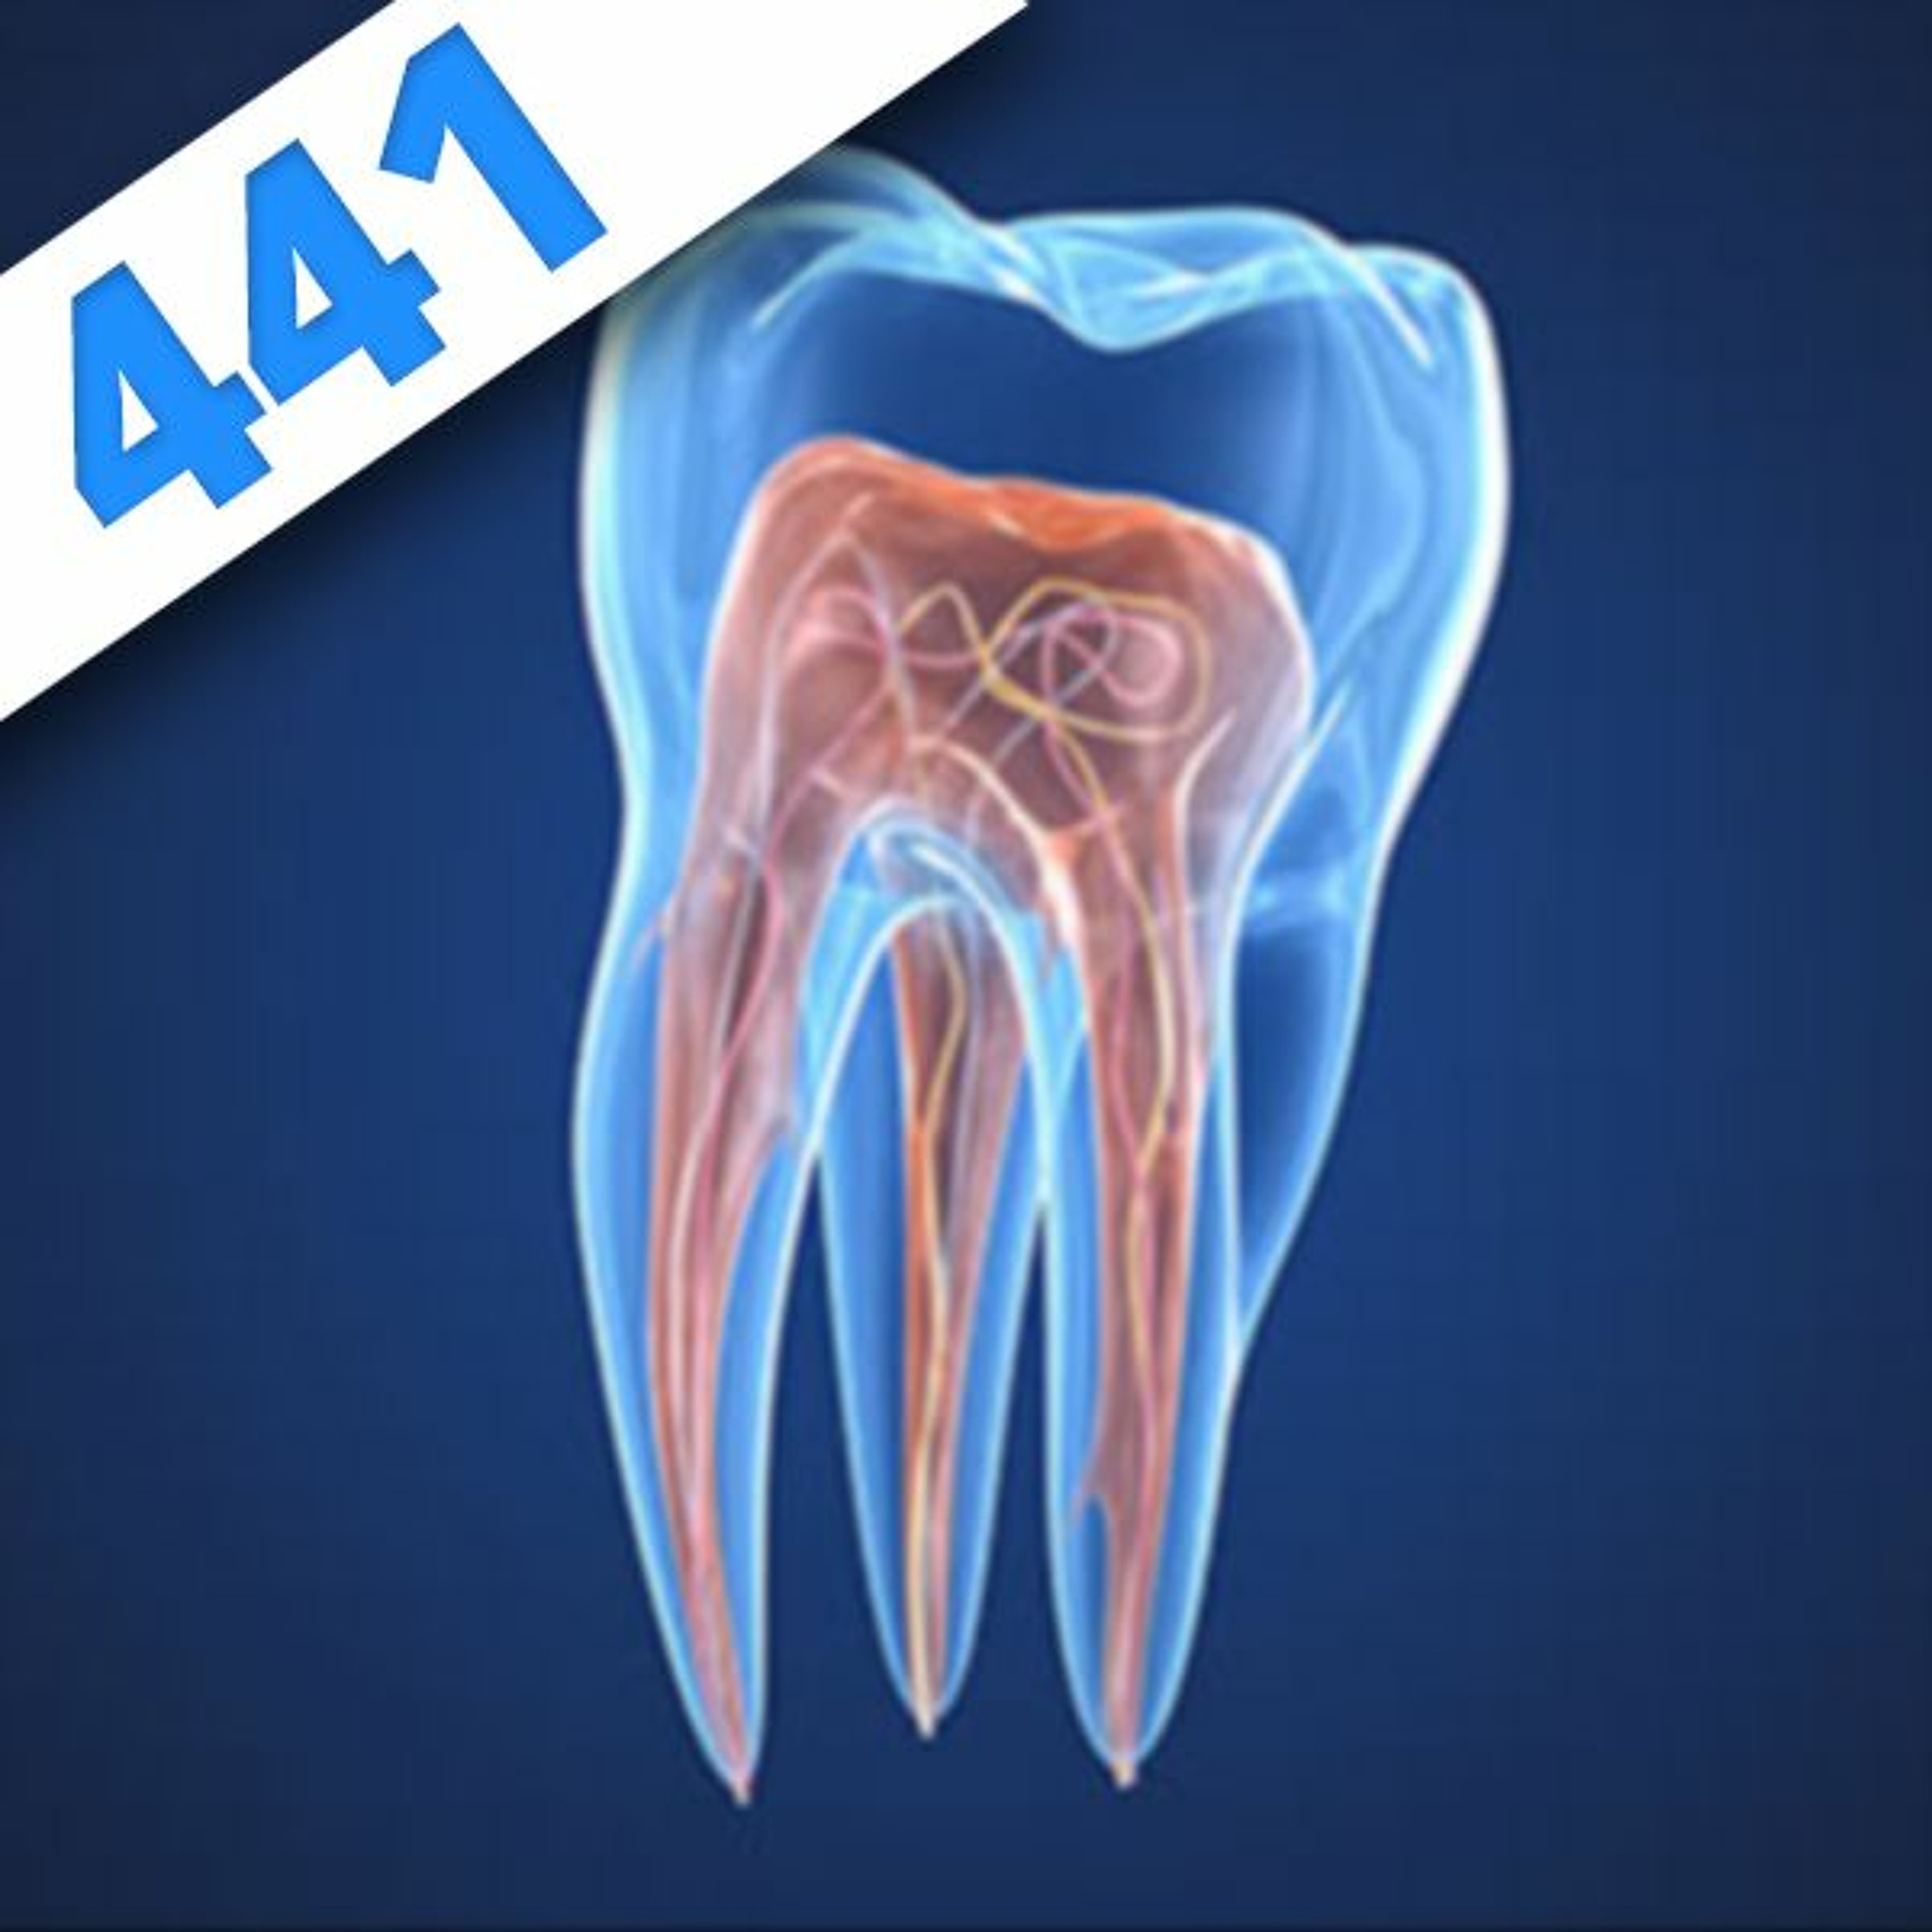 441 - Dans les dents, avec Cyril Vidal